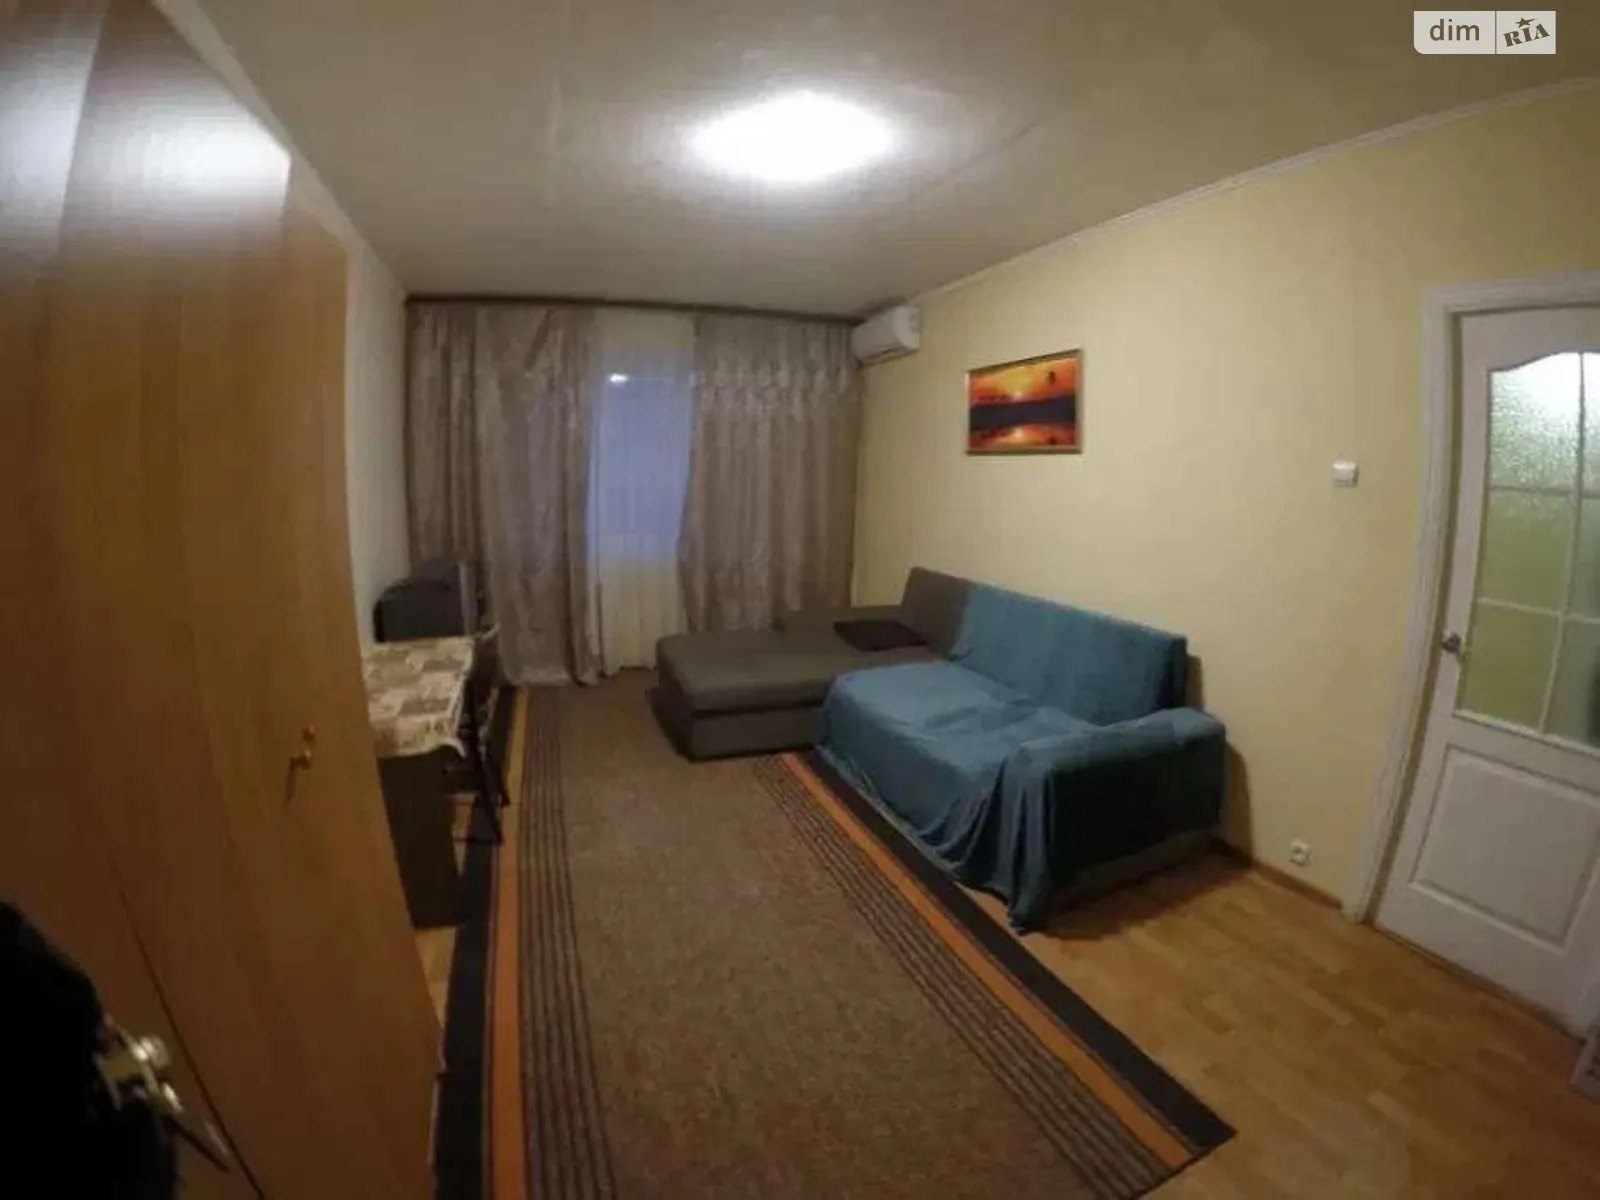 Продается комната 37 кв. м в Киеве, цена: 48000 $ - фото 1